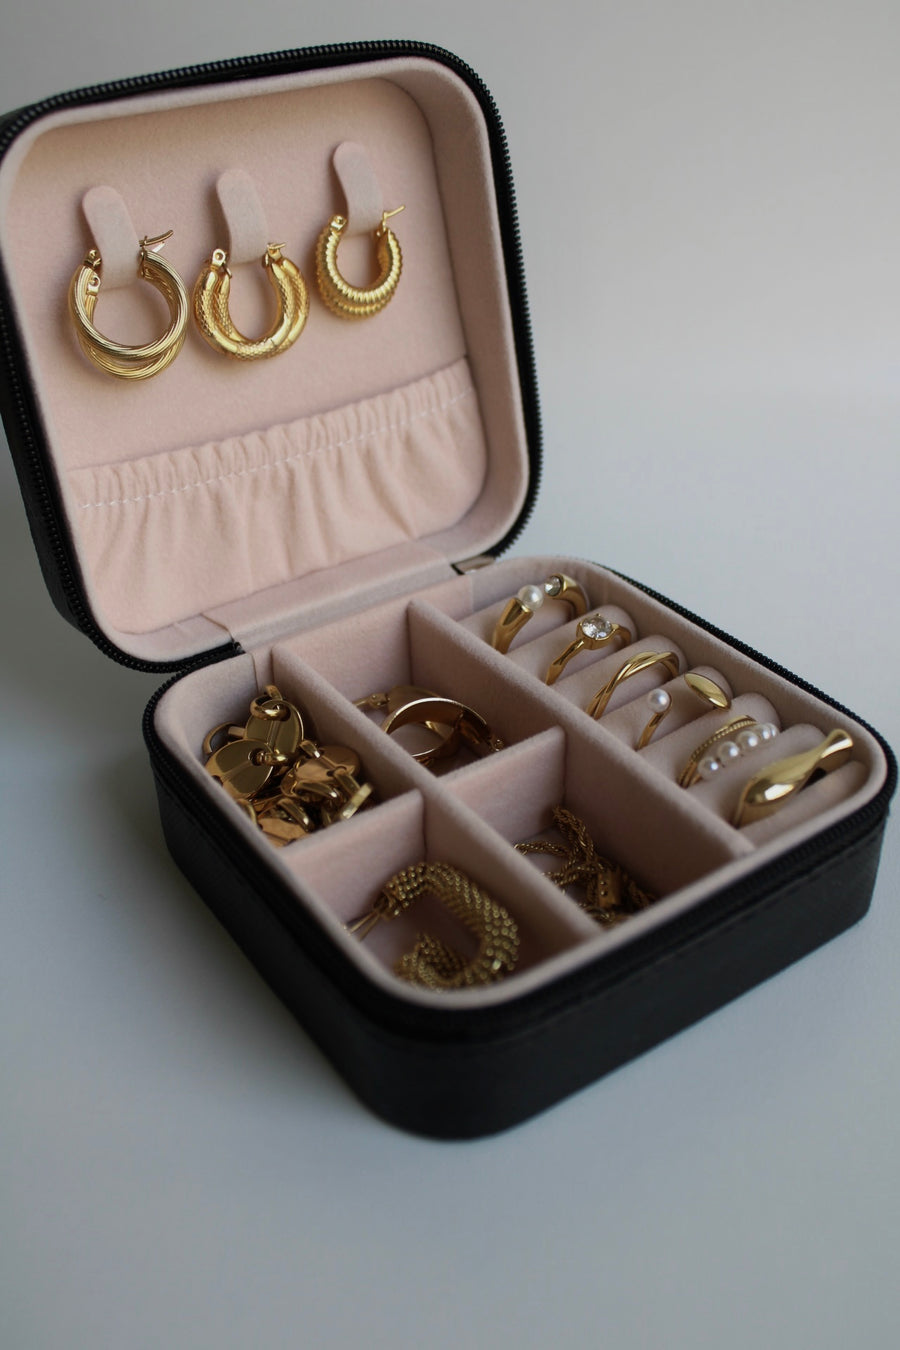 Jewelry case